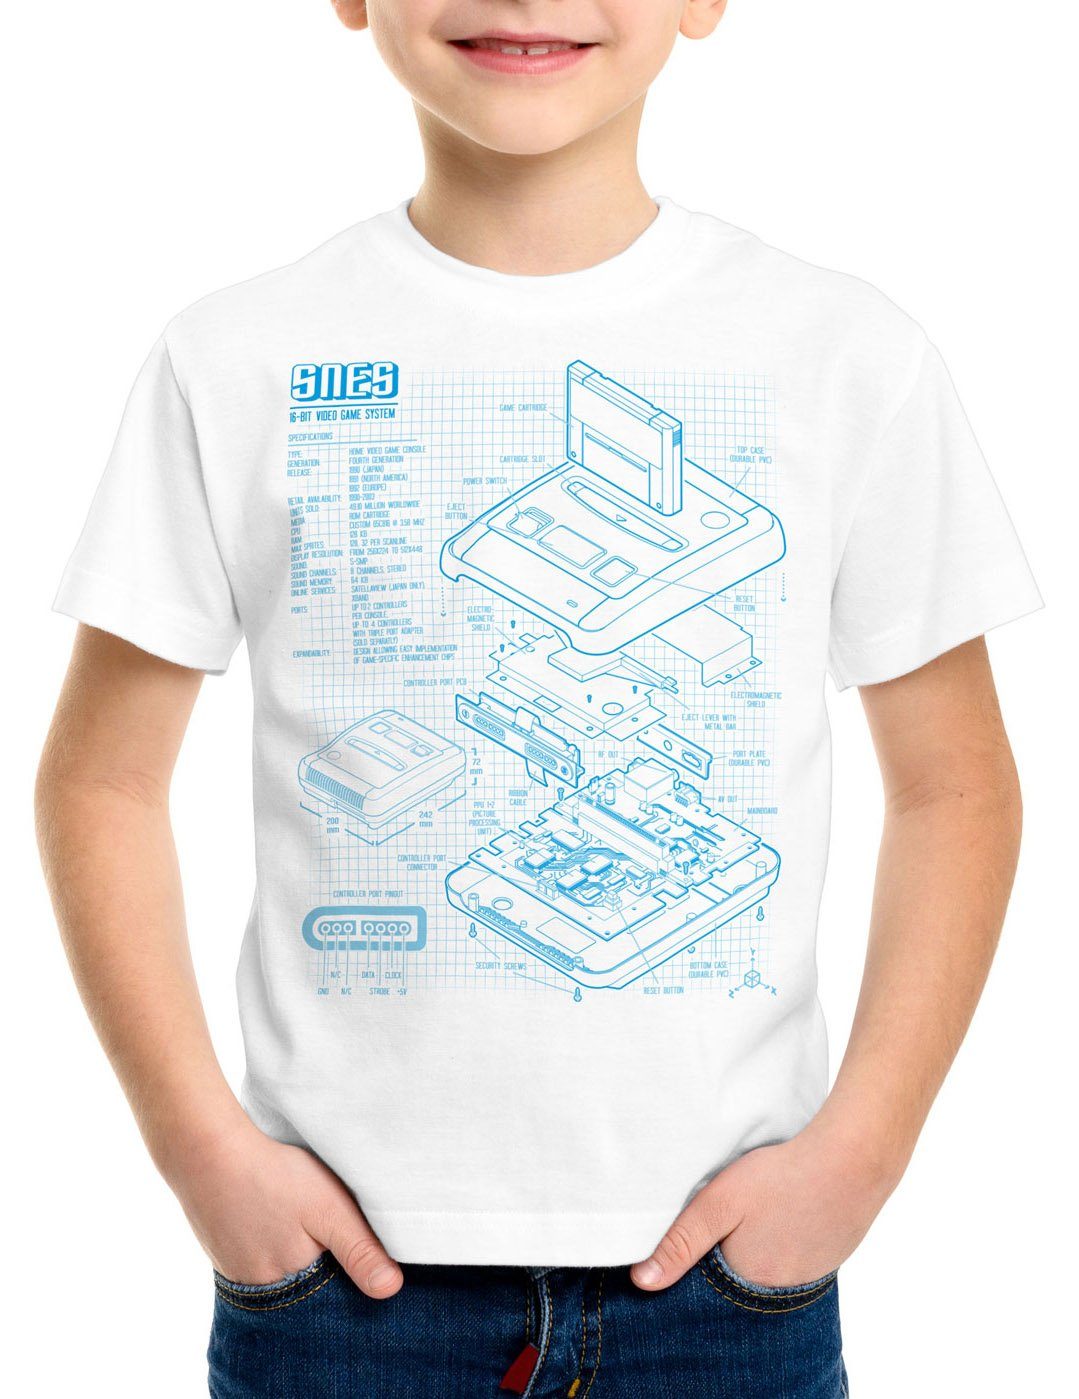 Kinder Videospiel Print-Shirt SNES Blaupause 16-Bit weiß style3 T-Shirt